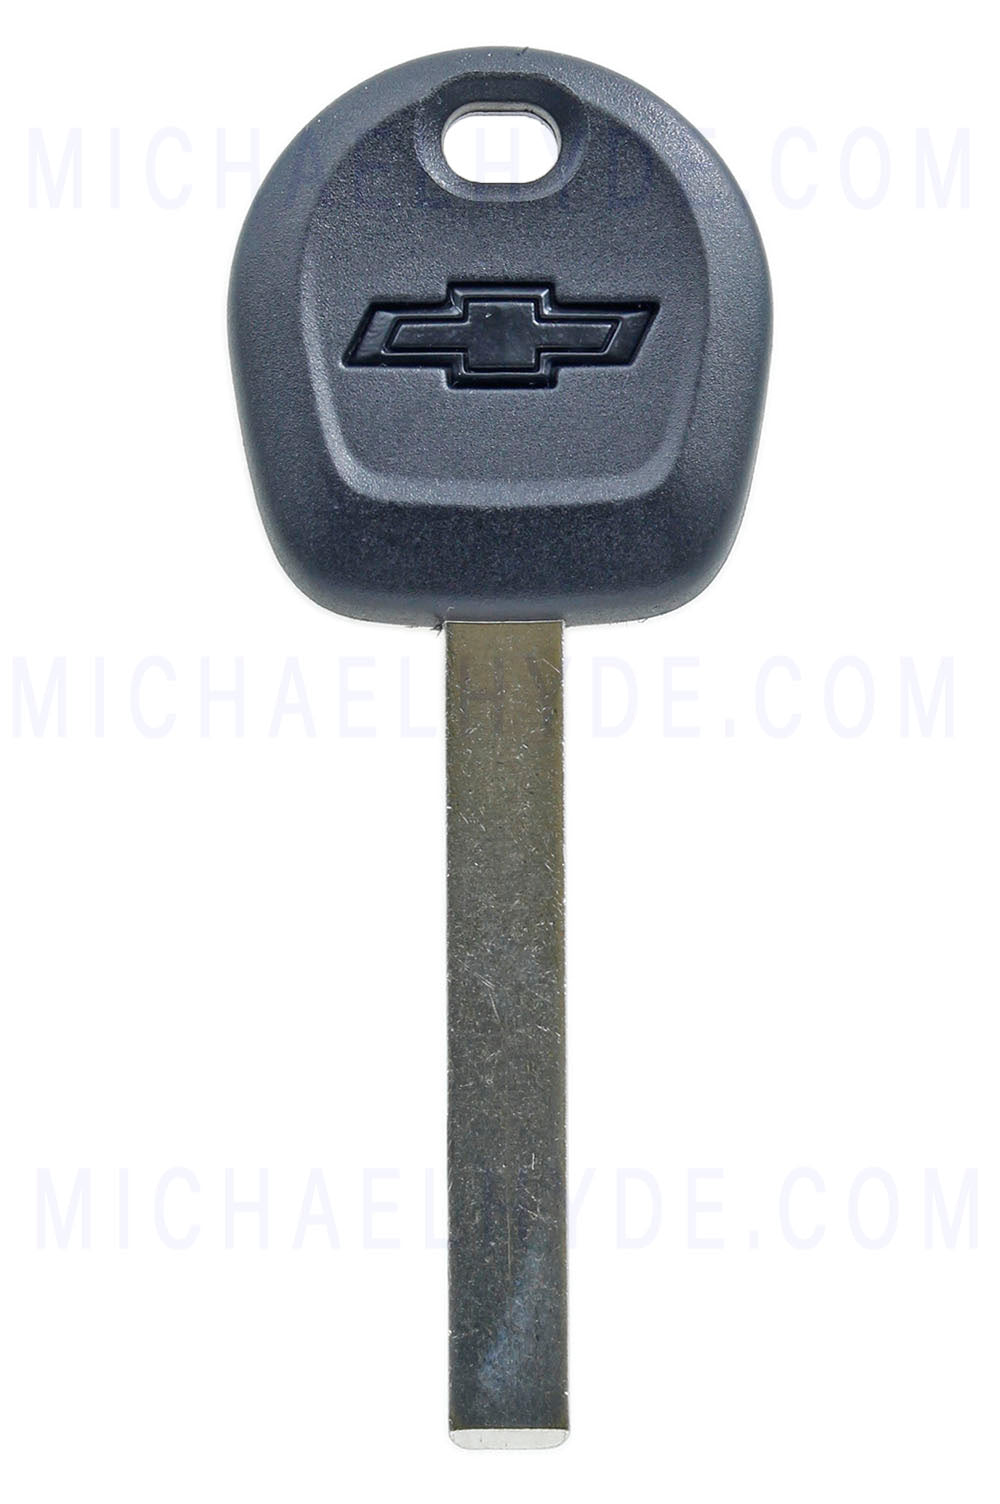 5927928 Chevy Logo  2-Track 10-cut Transponder Key for Camaro, Equinox, Silverado, Sierra and others (older# Strattec 5924205) HU100 B119-PT - Superceded to 5933963